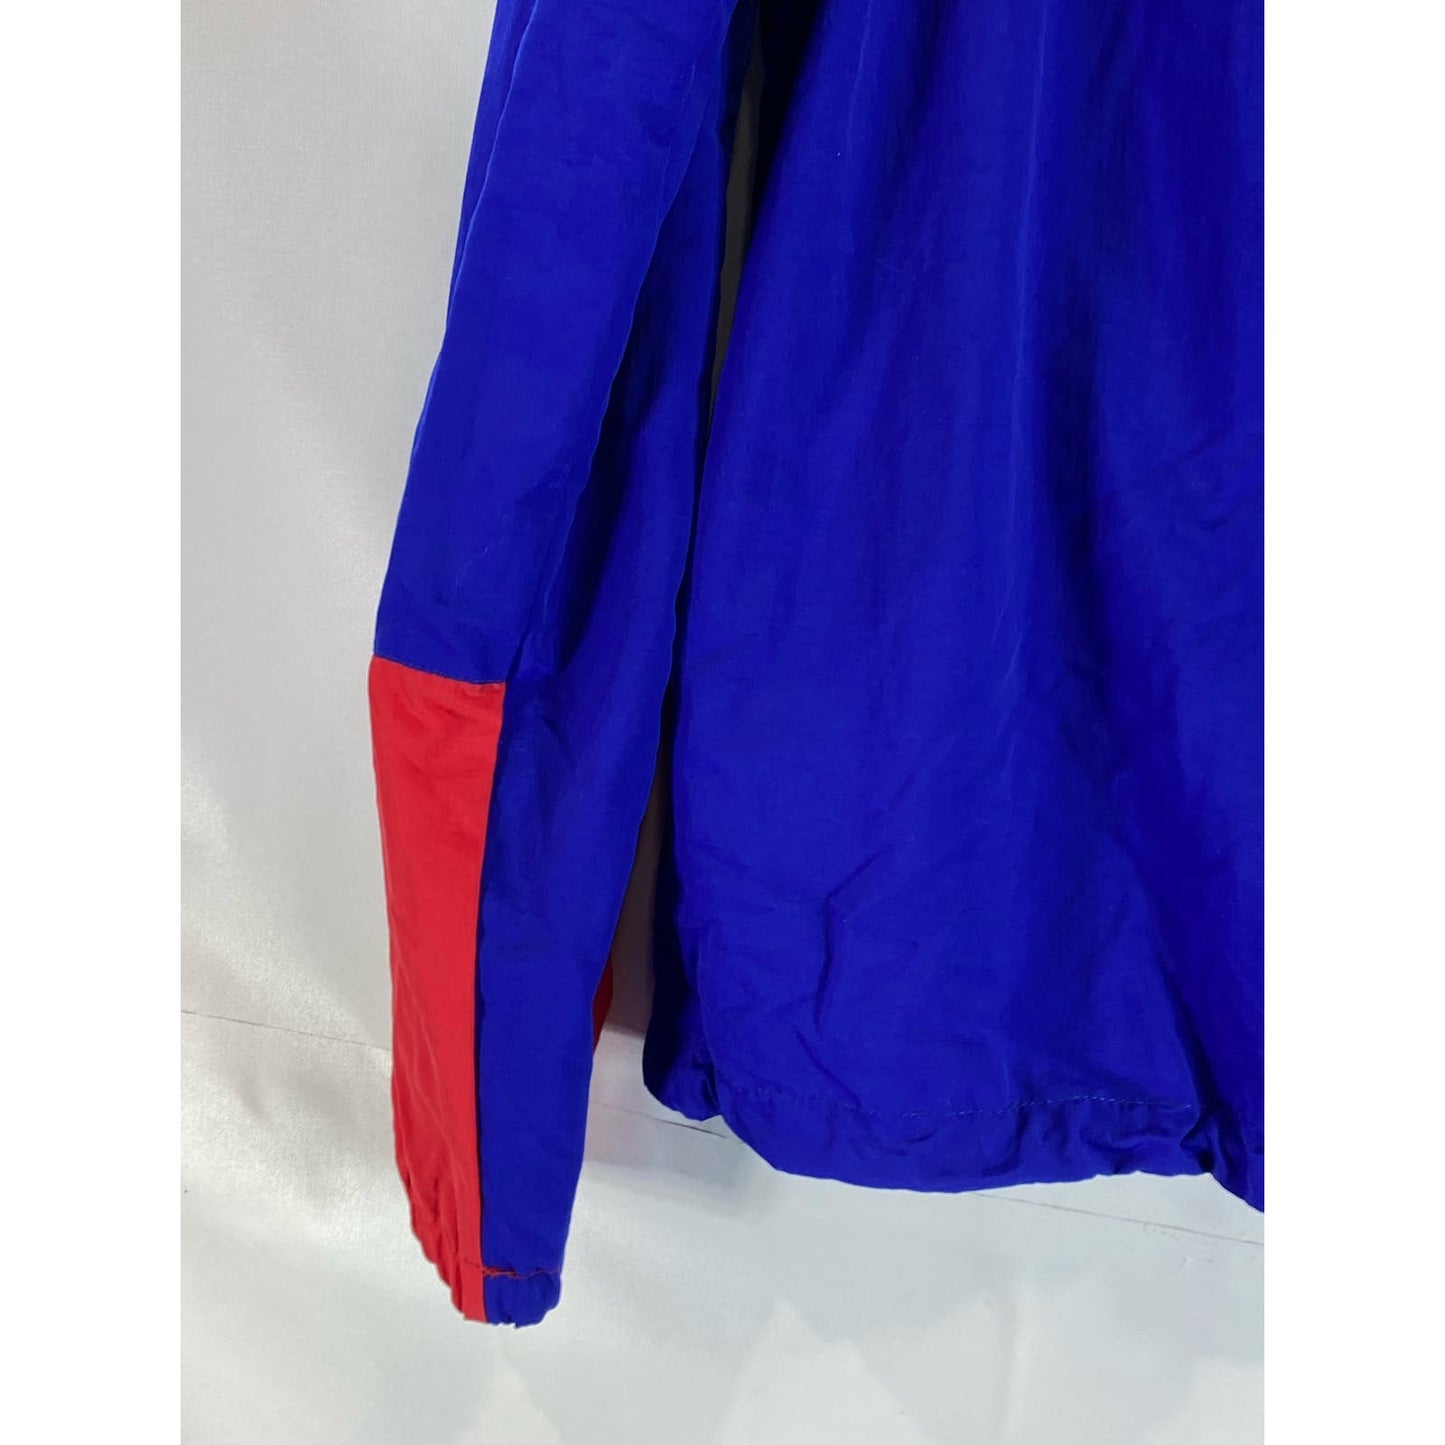 SUPERDRY Men's Red/Blue Drawstring Hood Zip-Up Athletic Jacket SZ XL